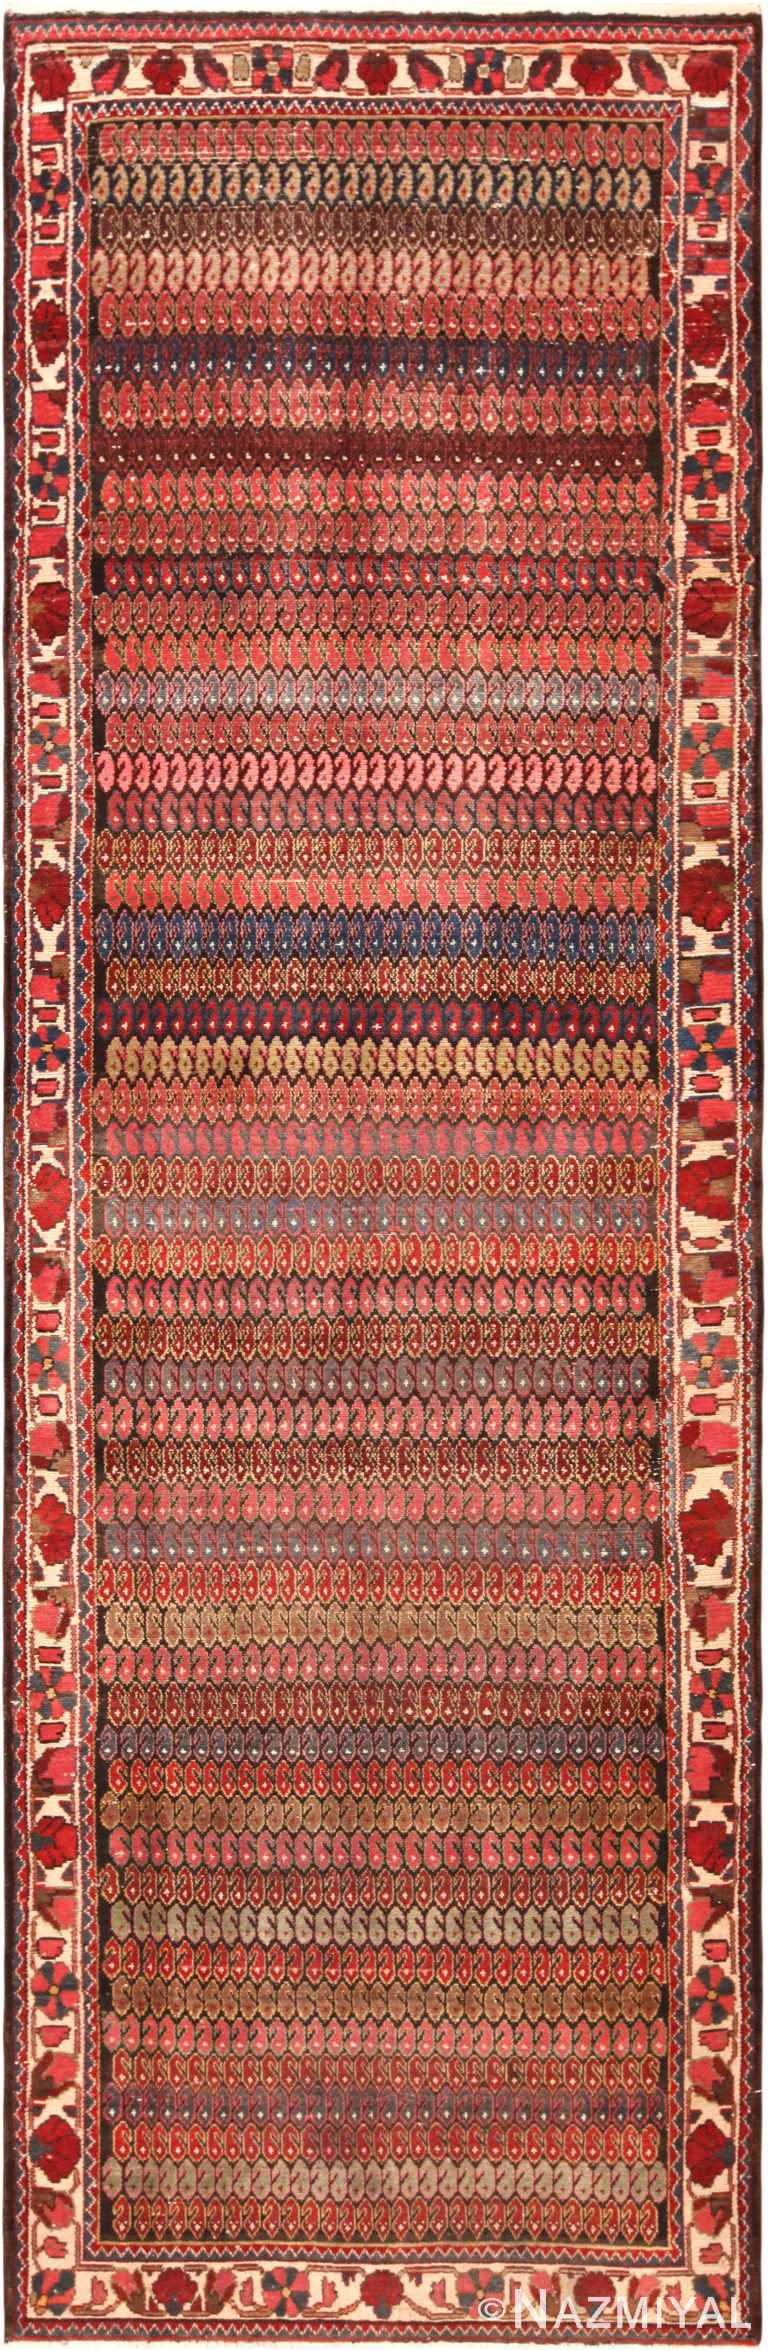 Antique Persian Bakhtiari Runner Rug 72021 by Nazmiyal Antique Rugs